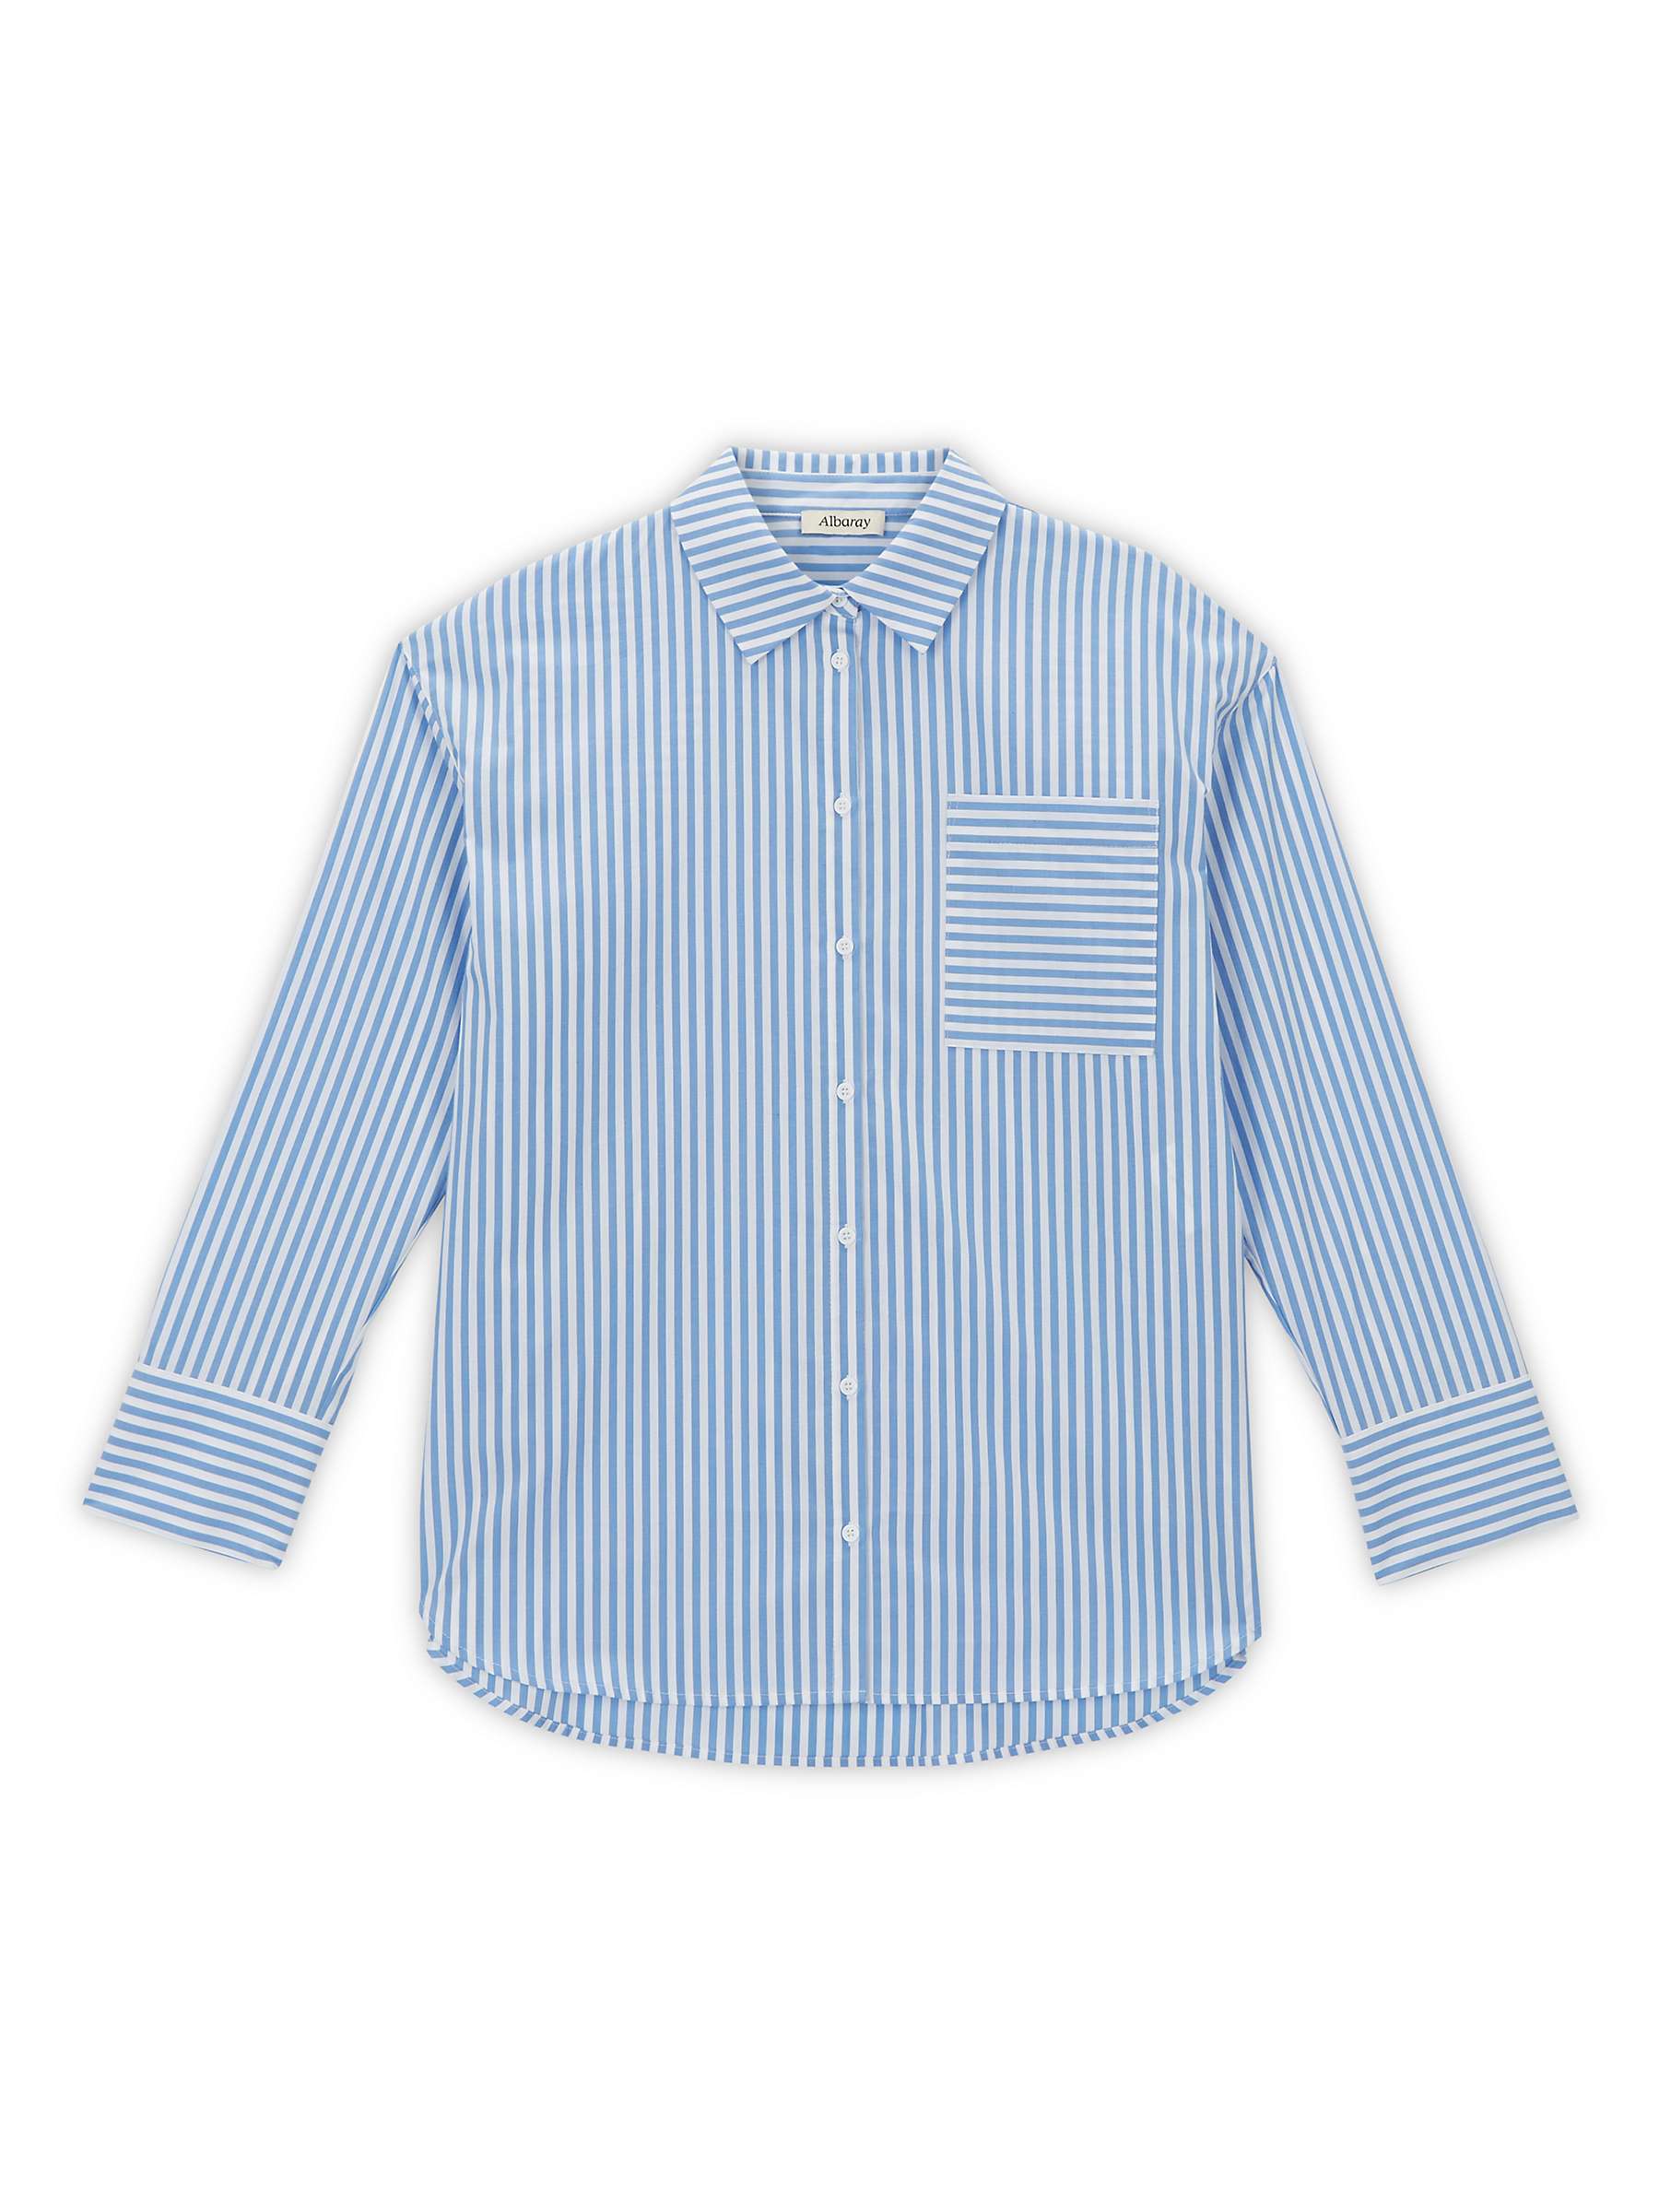 Buy Albaray Stripe Organic Cotton Shirt, Blue/White Online at johnlewis.com